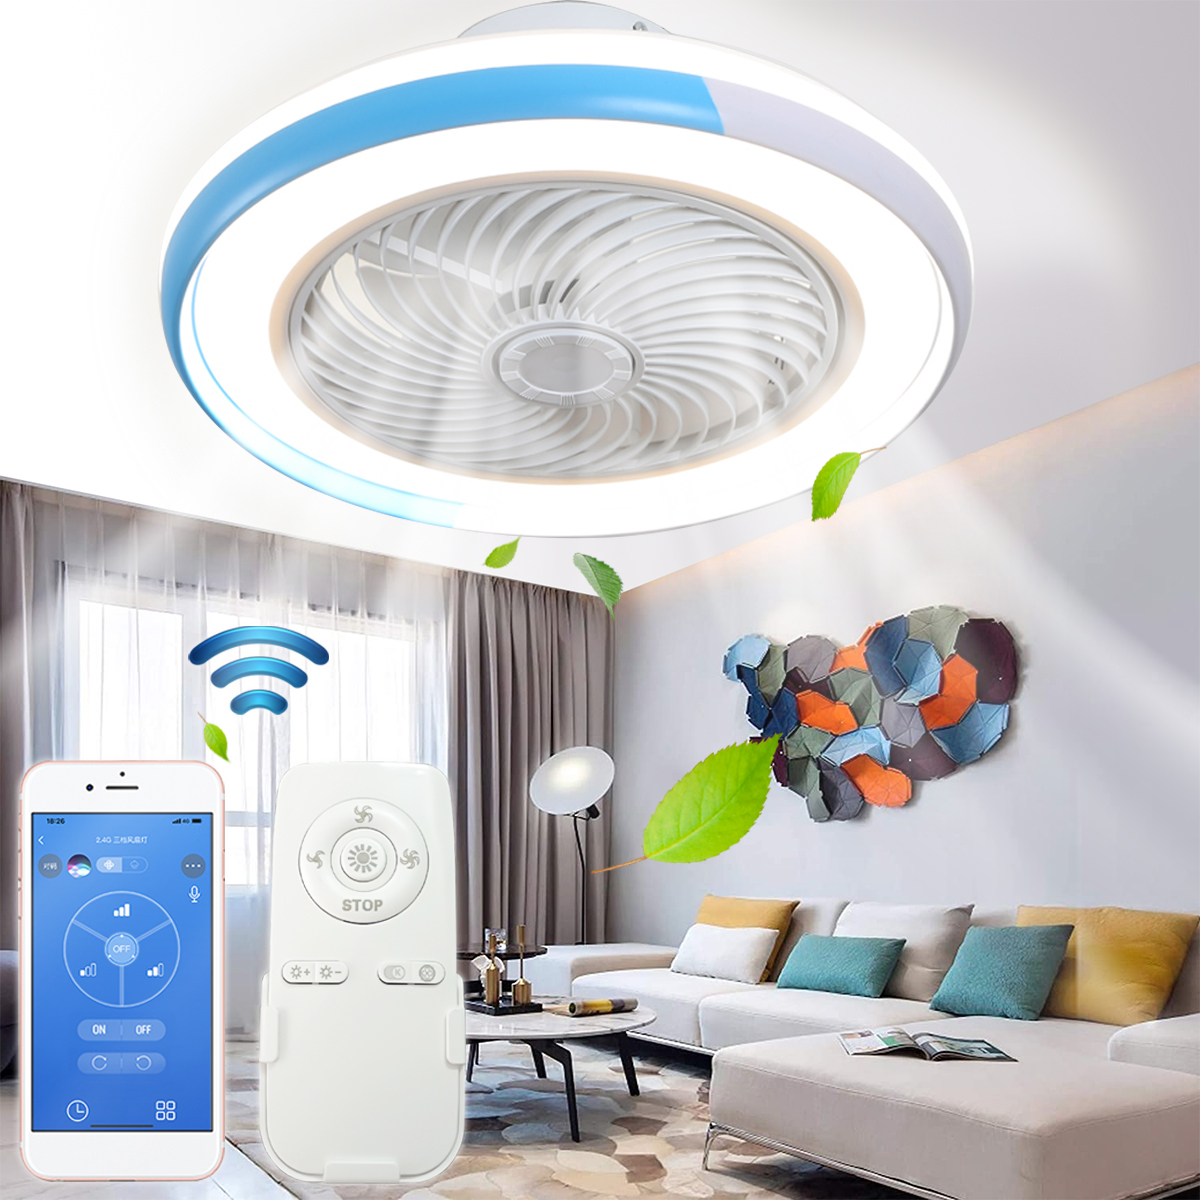 LED-Fan-Ceiling-Light-WiFi-Dimmable-Bedroom-Lamp-APPRemote-Control-220V-1861721-1